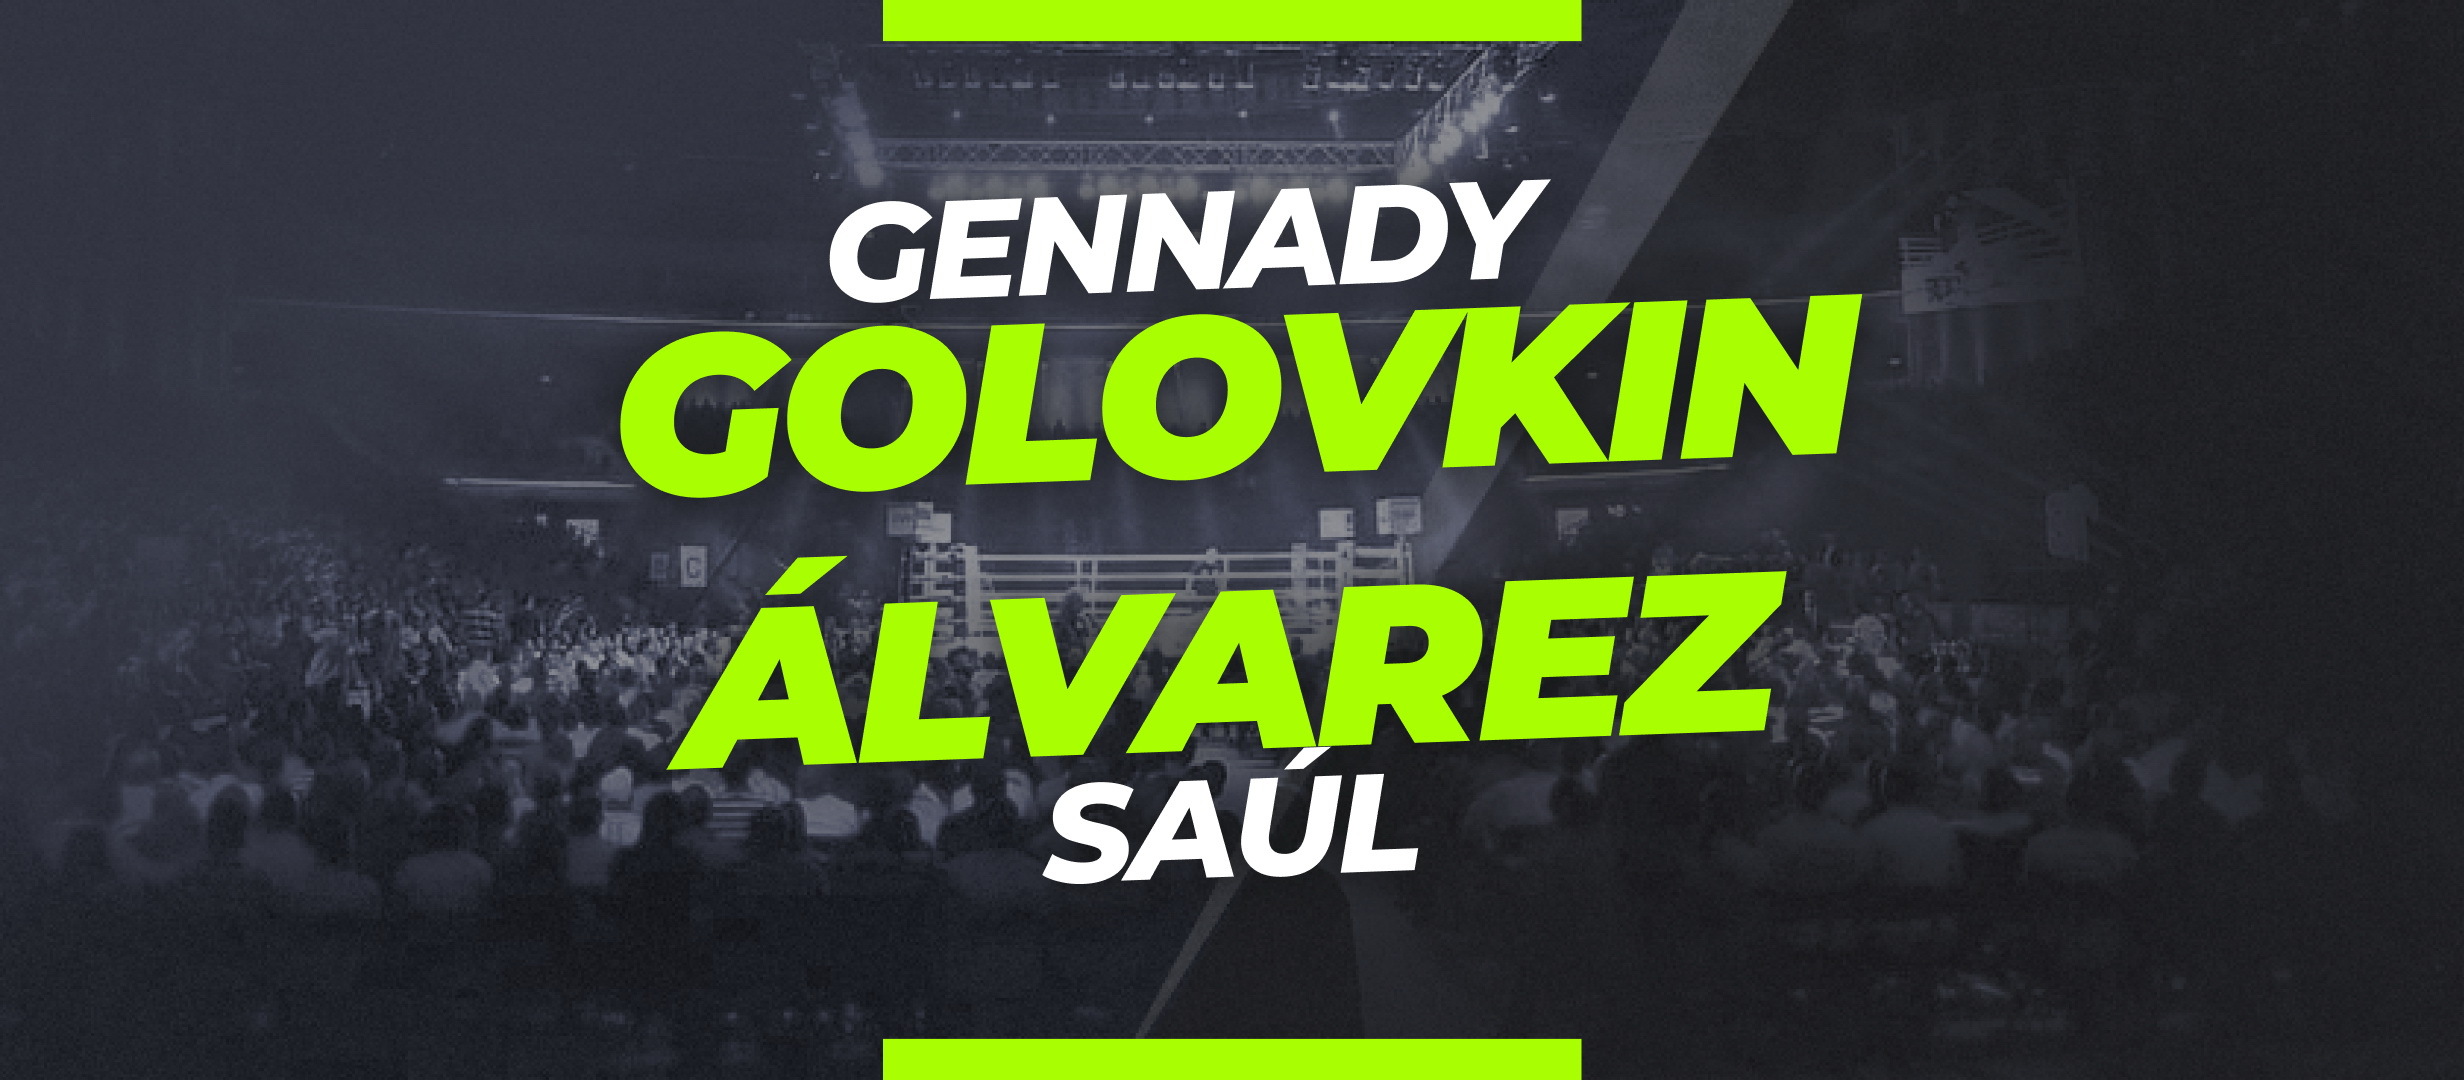 Golovkin vs Canelo 3: Betting odds on the fight